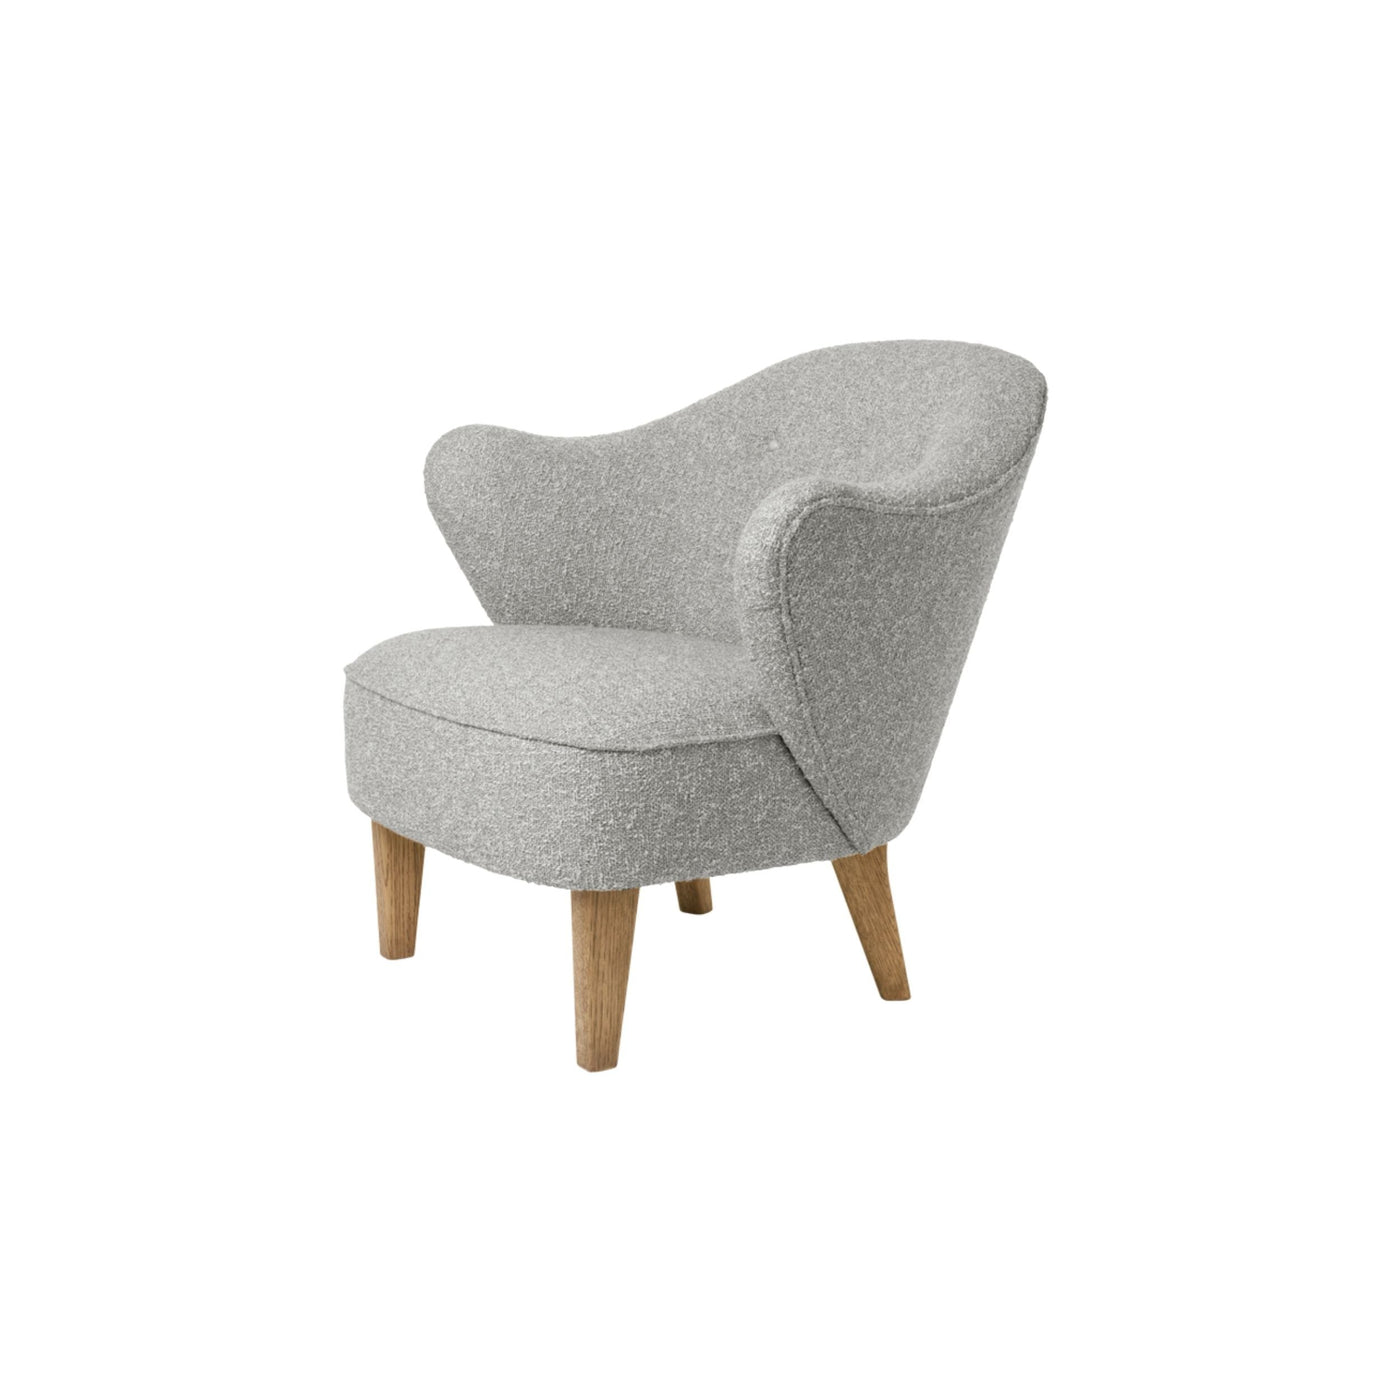 audo Ingeborg armchair. Made to order from someday designs #colour_vidar-123